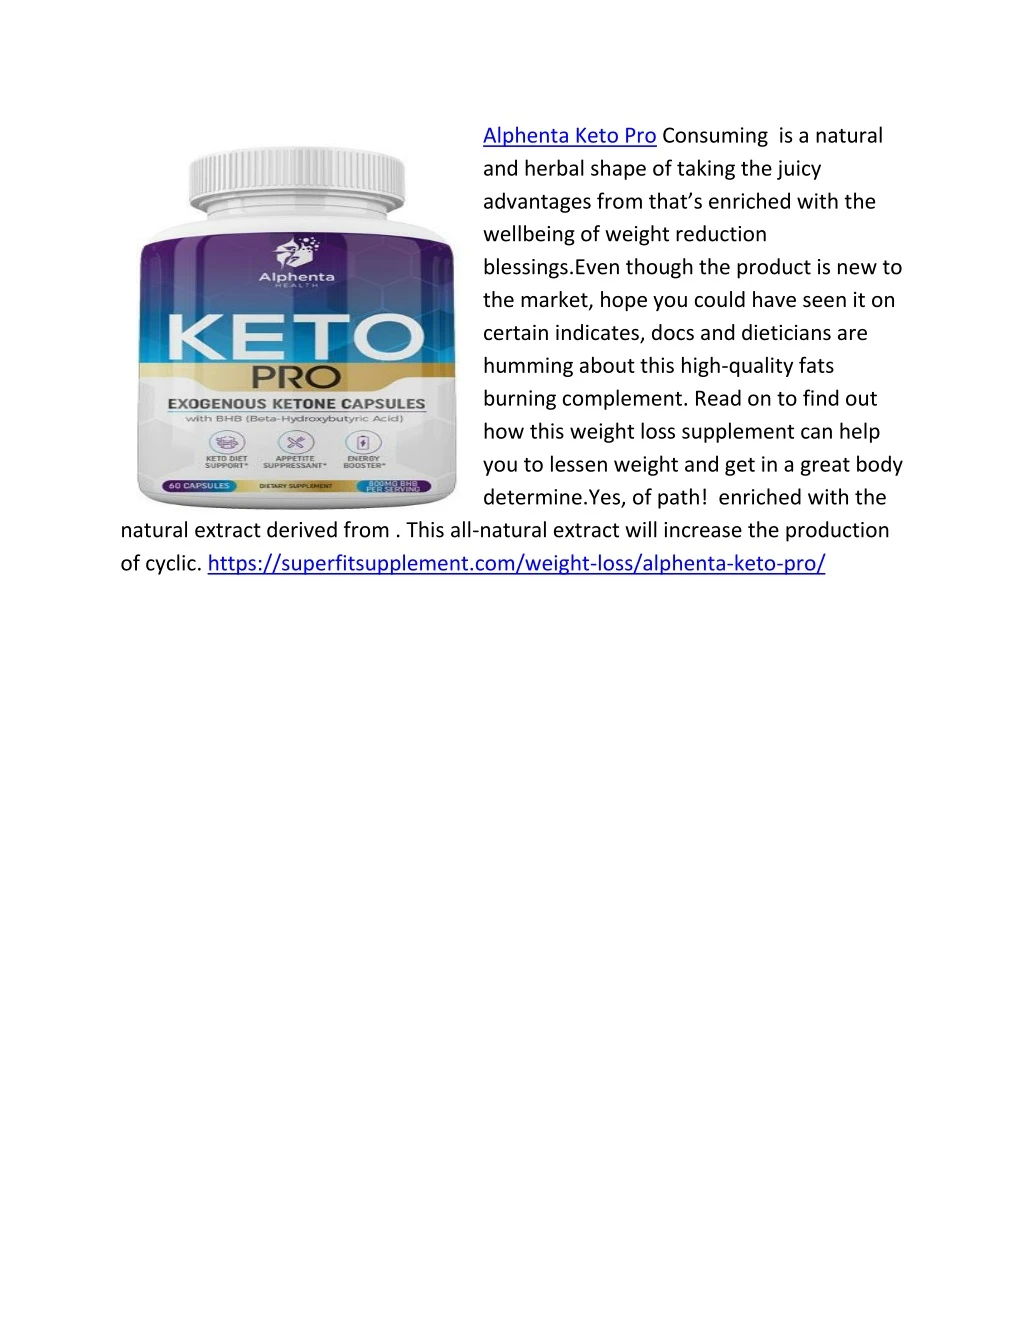 alphenta keto pro consuming is a natural